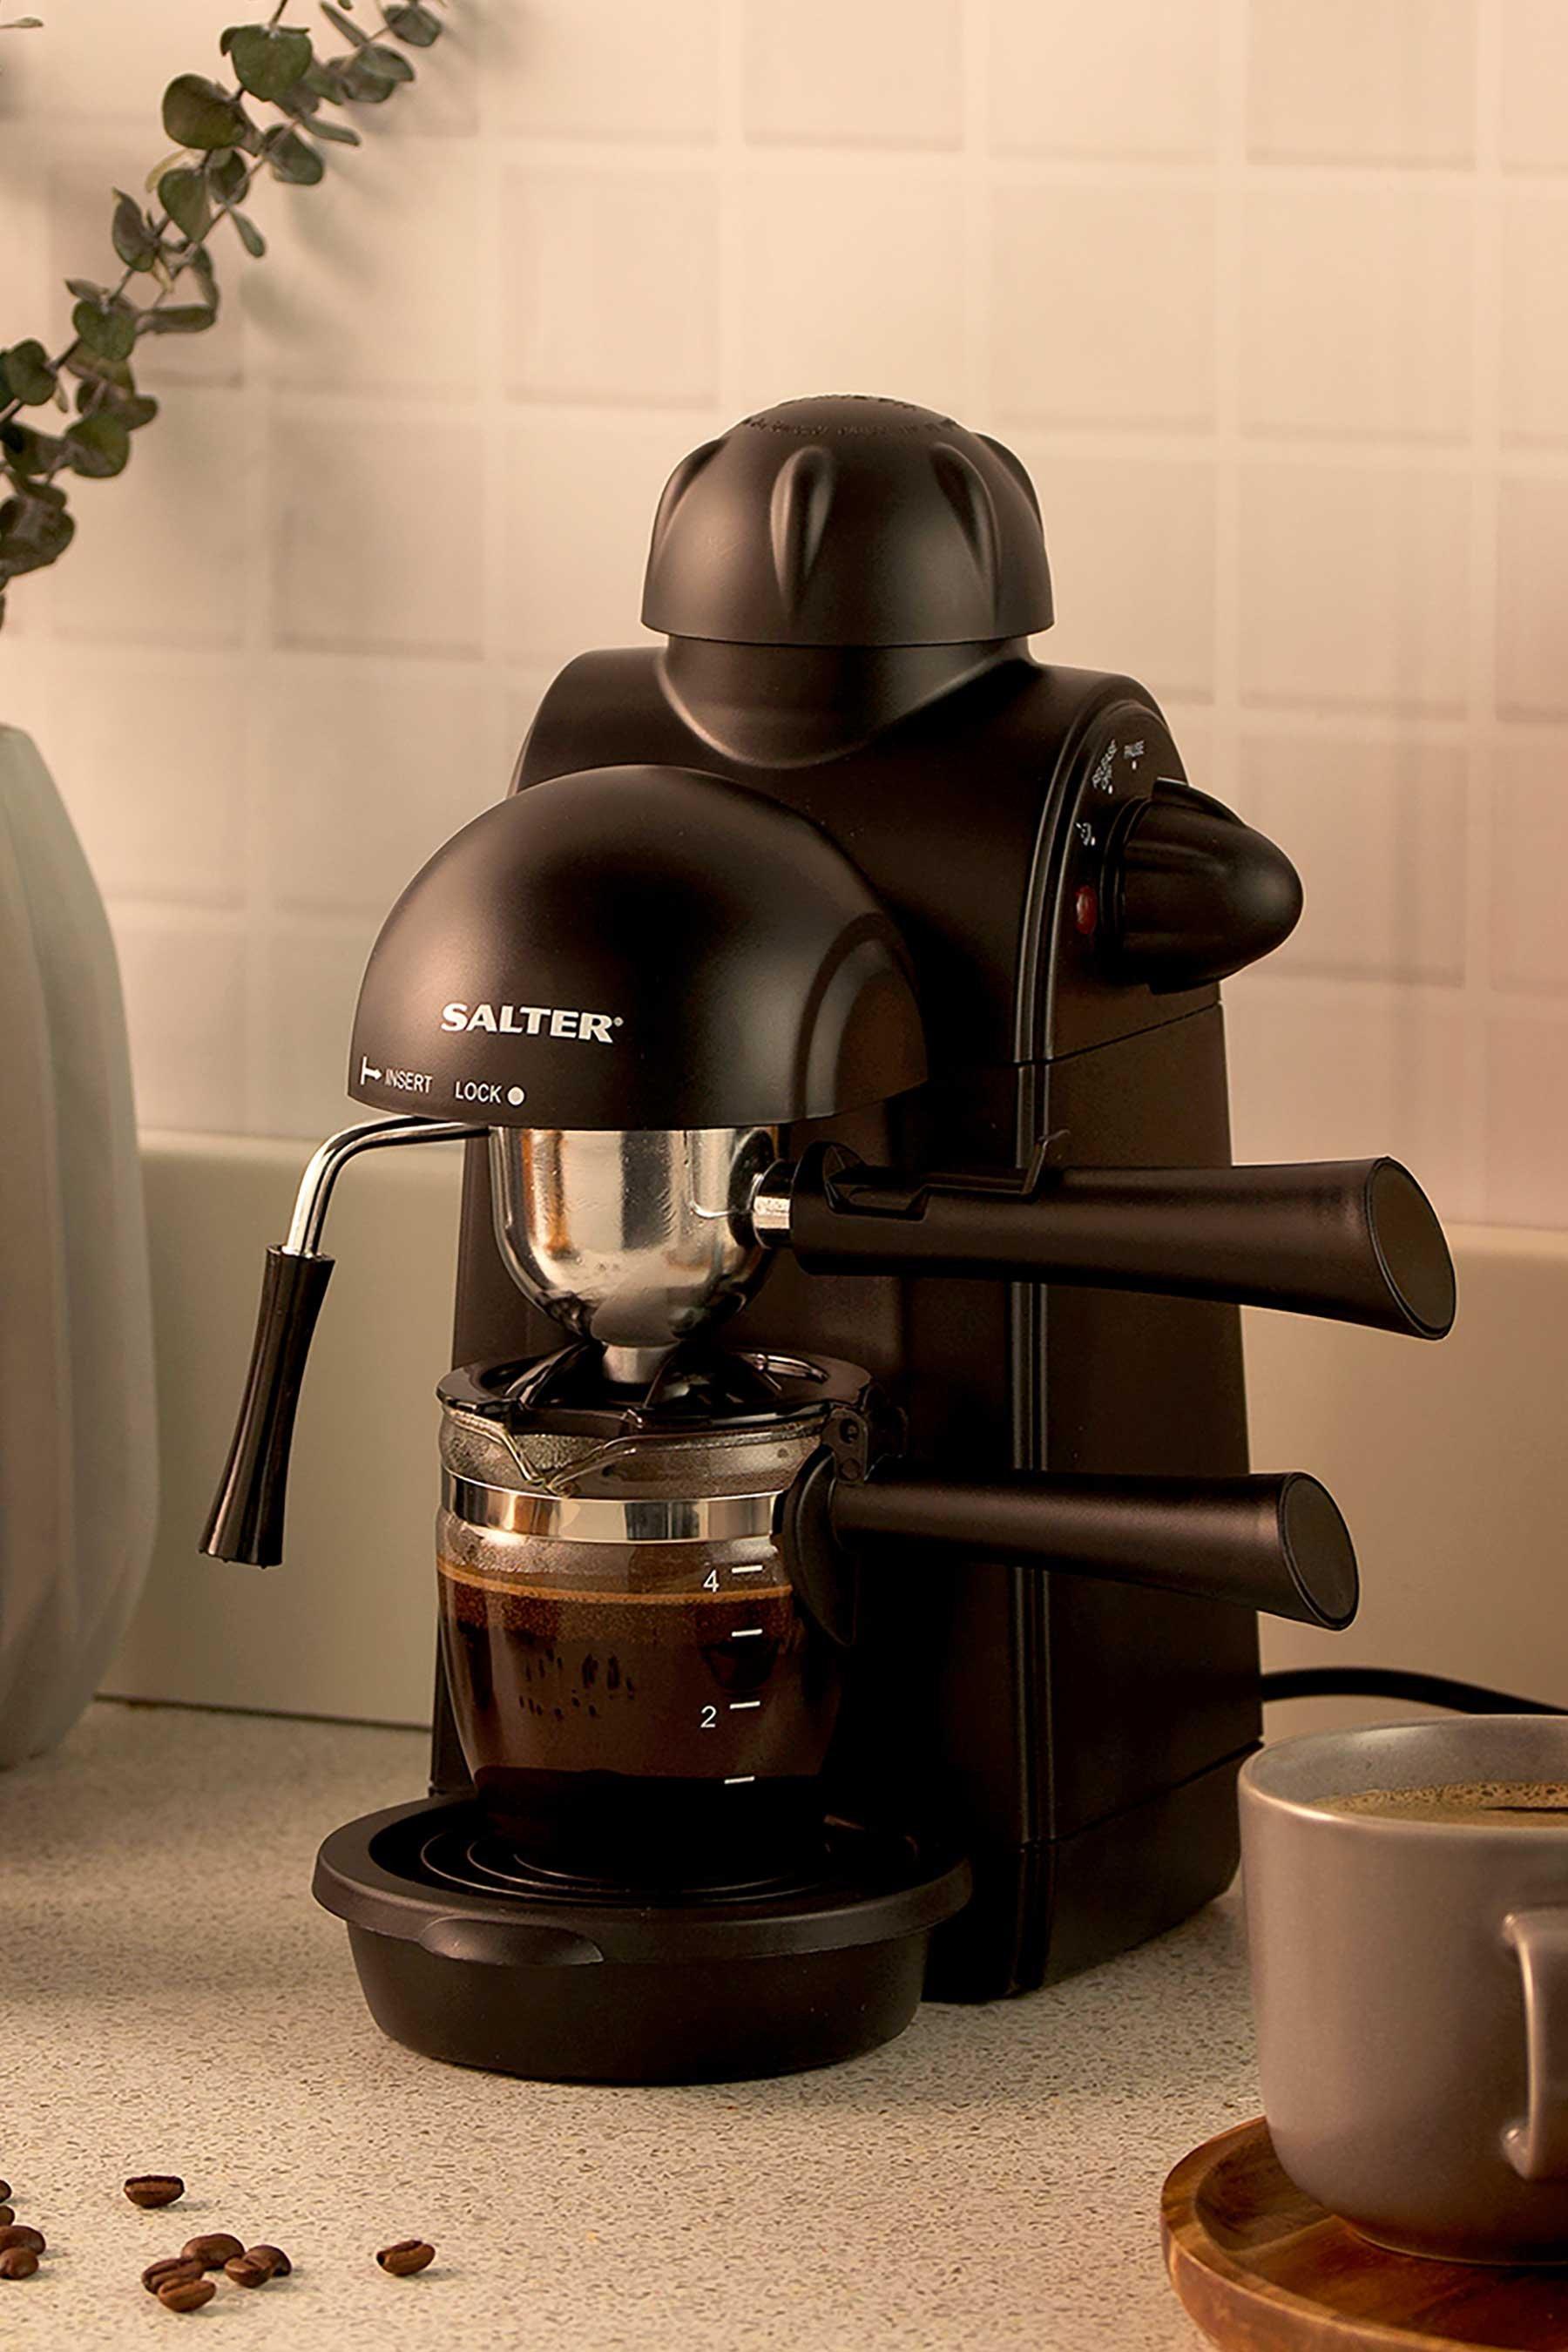  Mr. Coffee ECM20 Steam Espresso Maker, Black: Steam